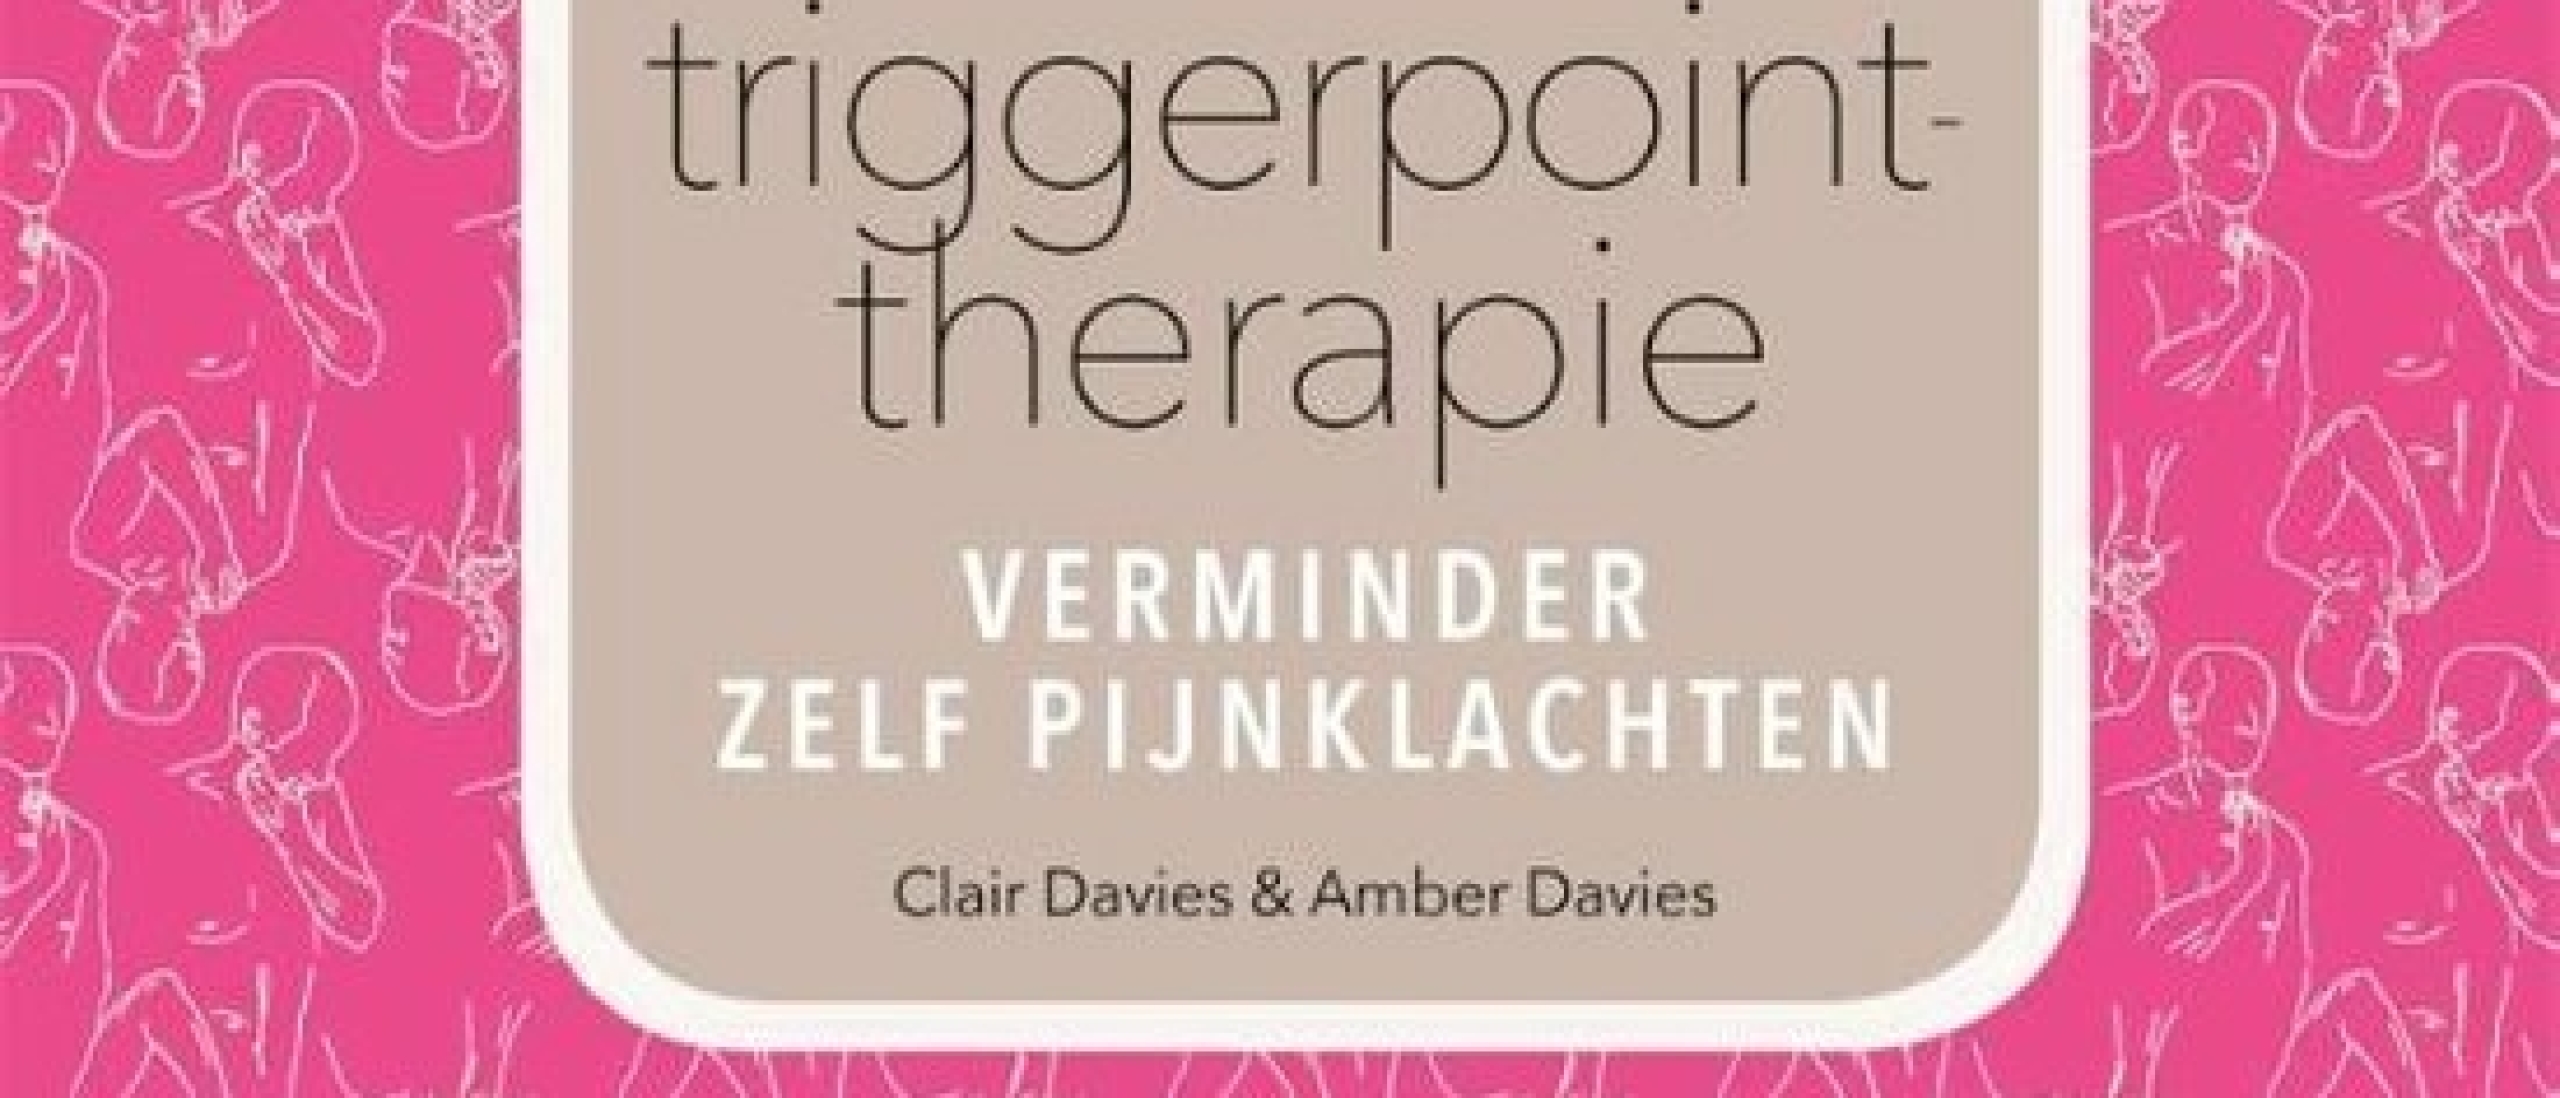 Triggerpoints massage: hoe kunt u de triggerpoints masseren?